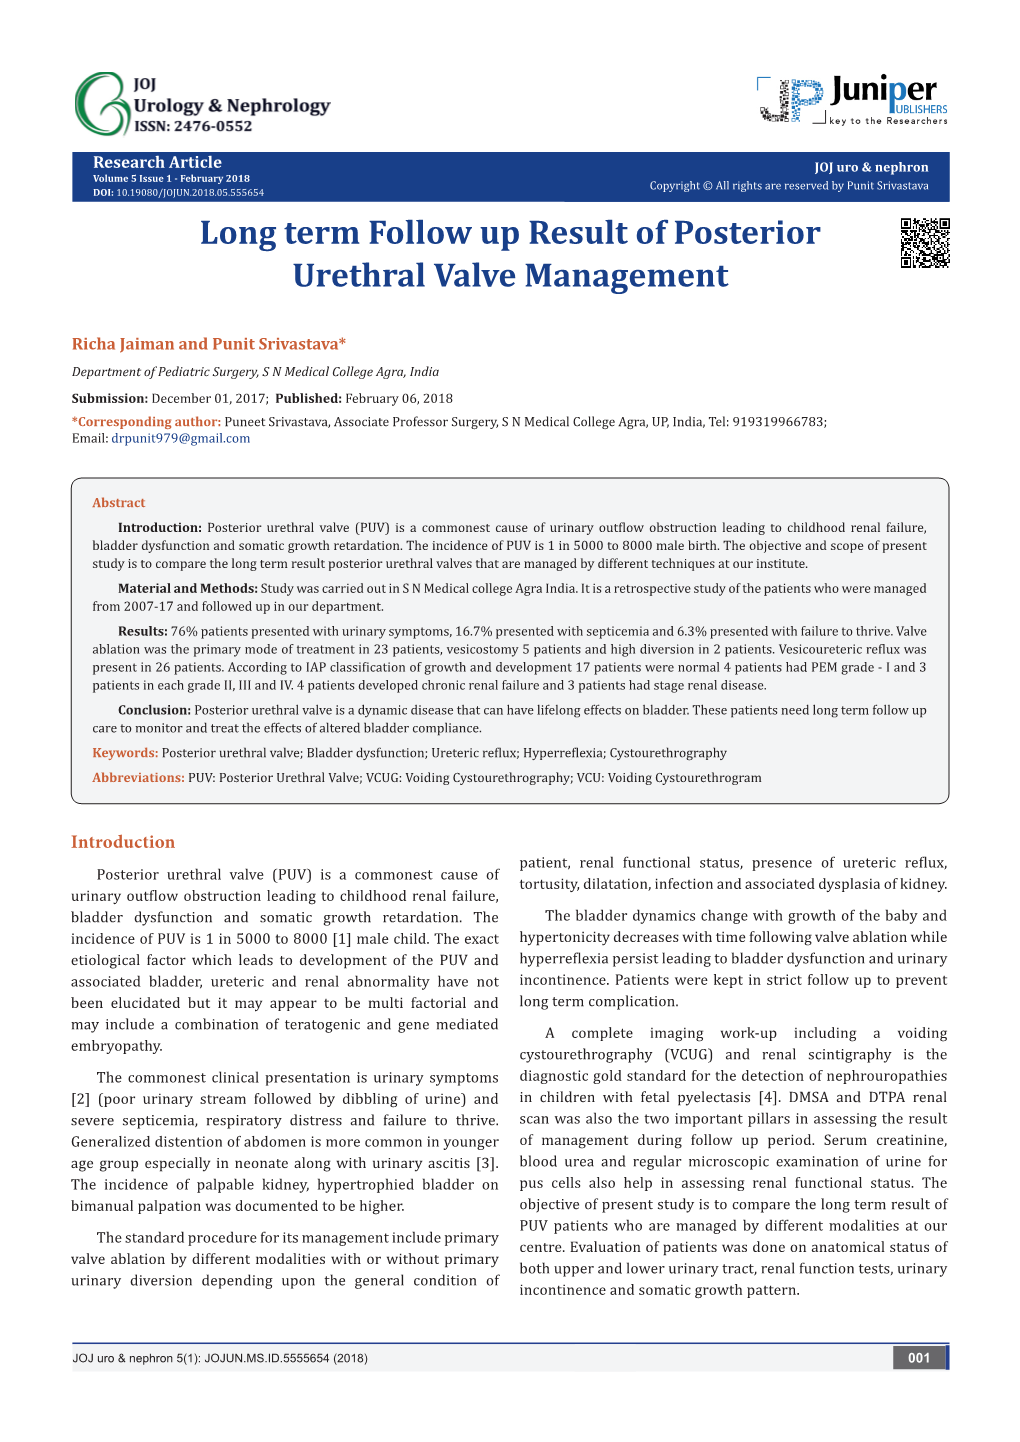 Long Term Follow up Result of Posterior Urethral Valve Management